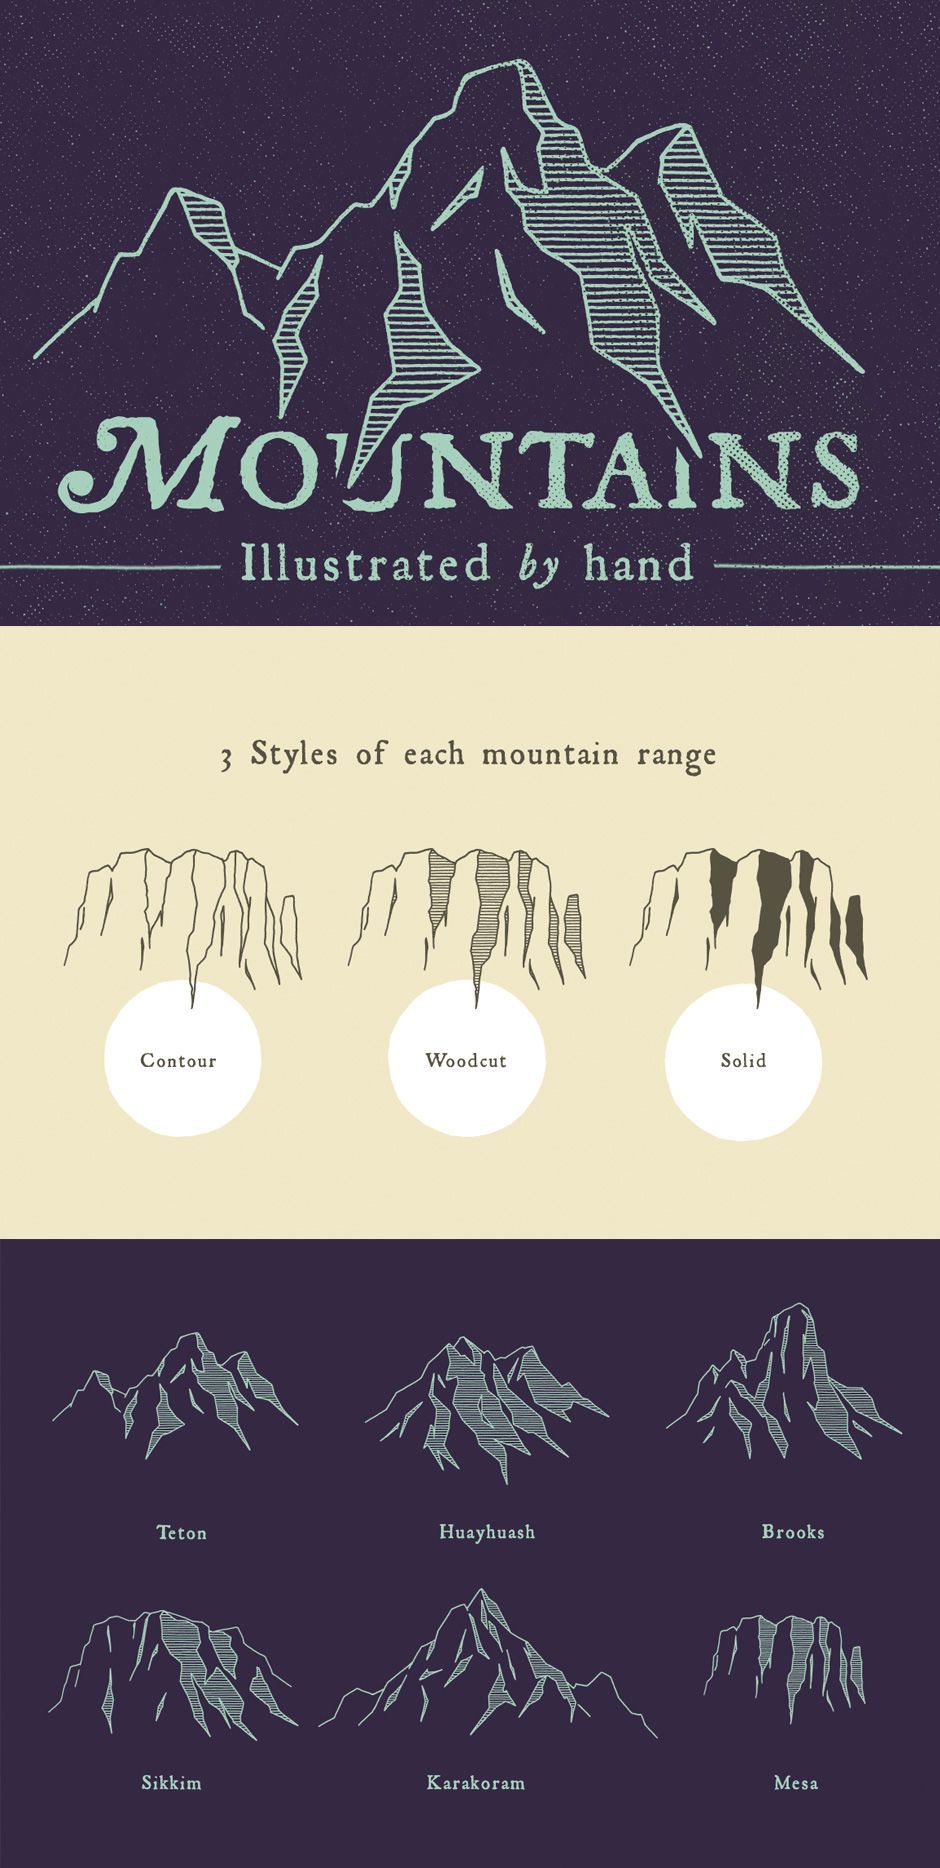 Cool idea for a mountain range – es